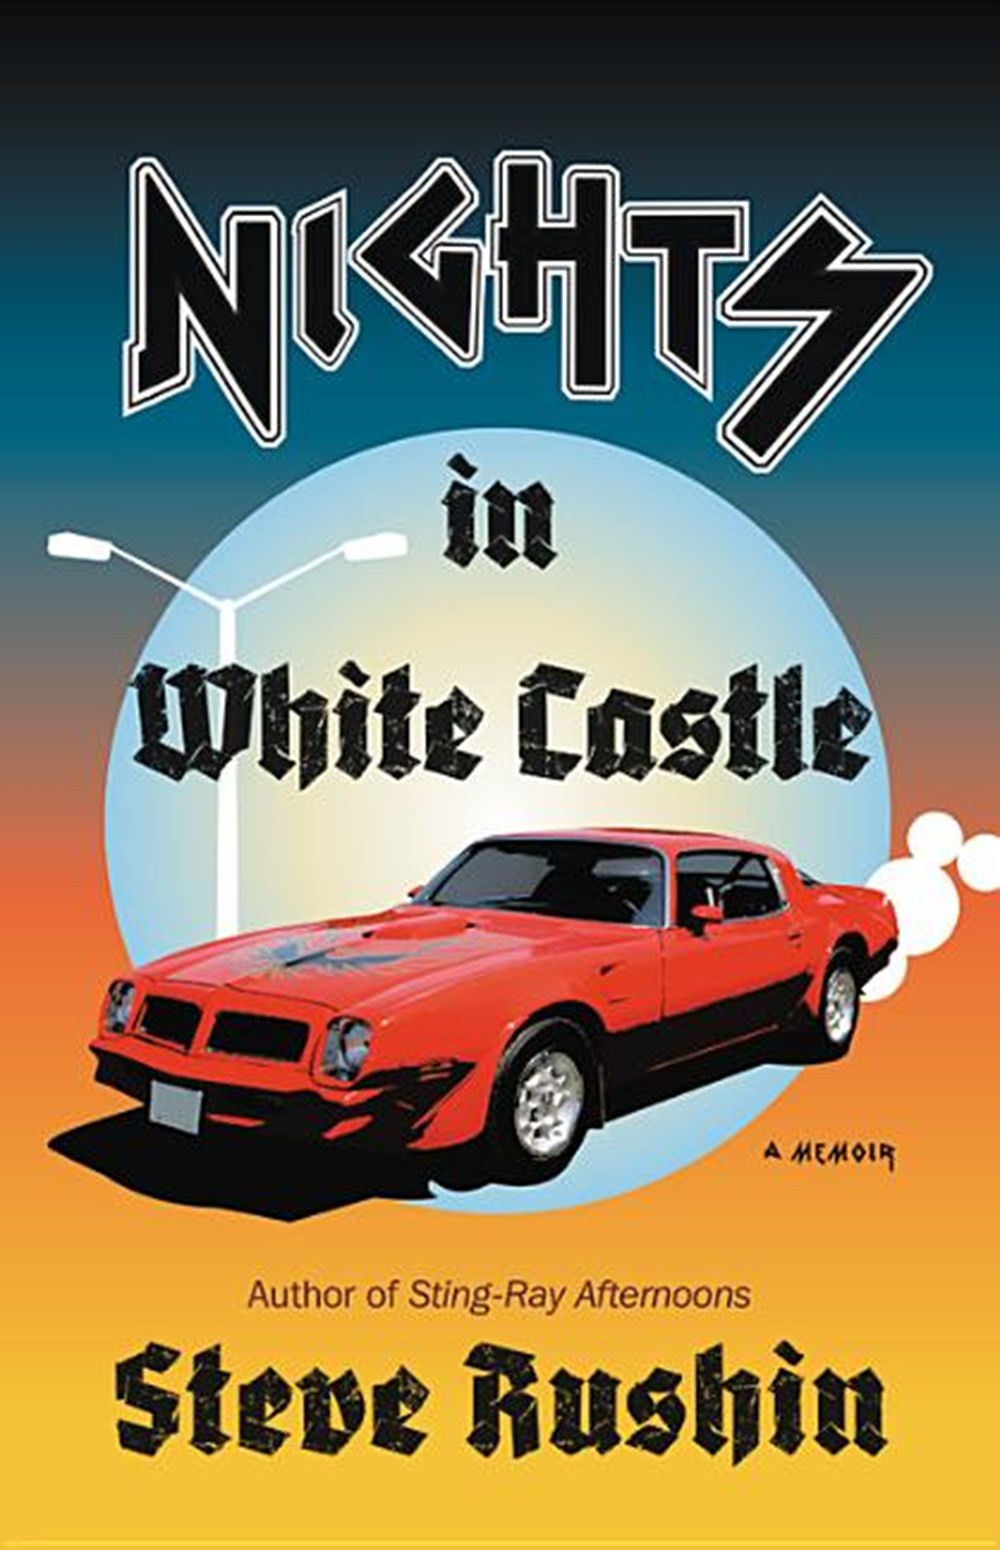 Nights in White Castle: A Memoir